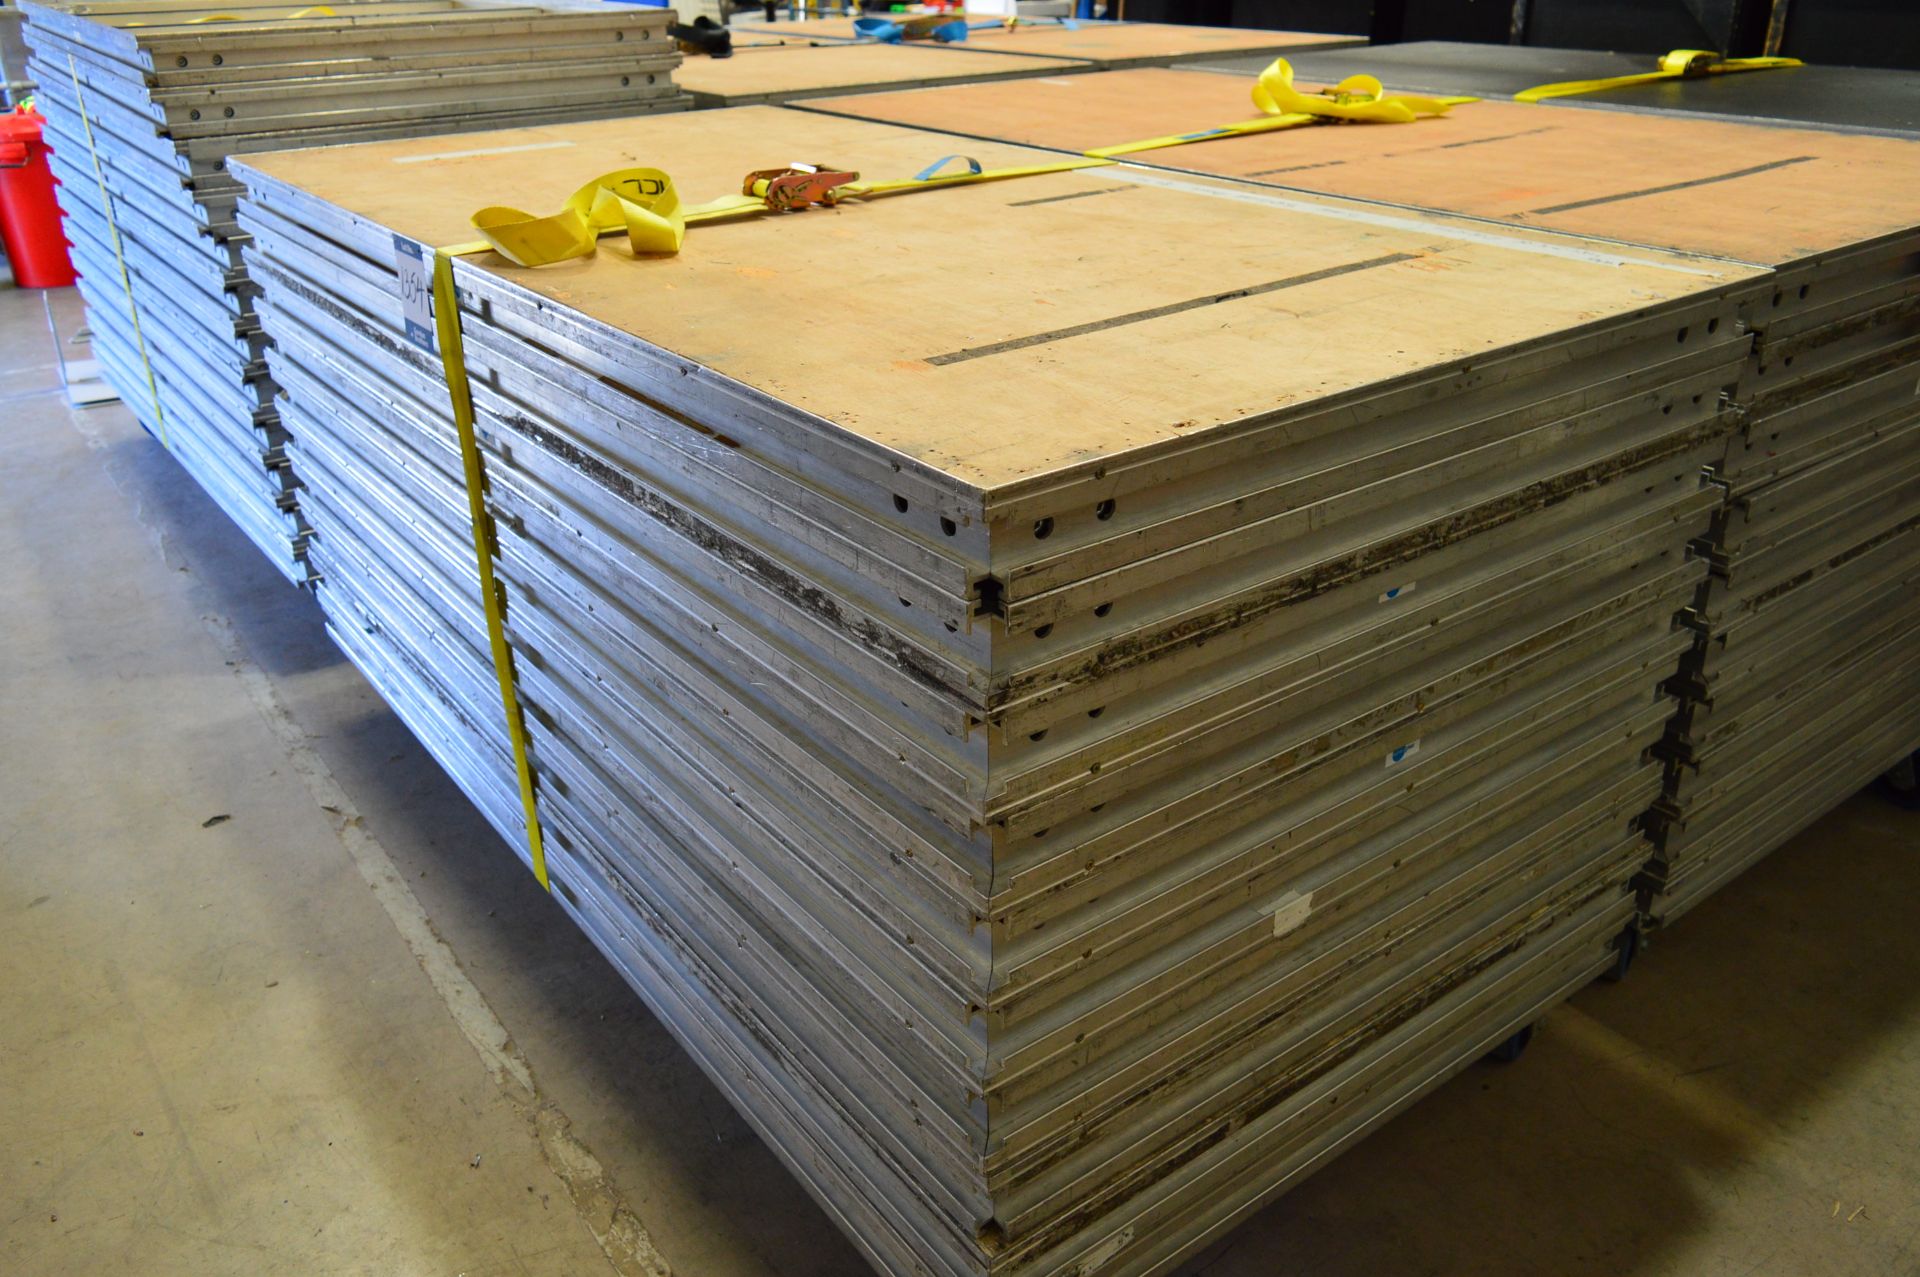 10x No. aluminium/plywood rectangular stage deck s - Image 2 of 2